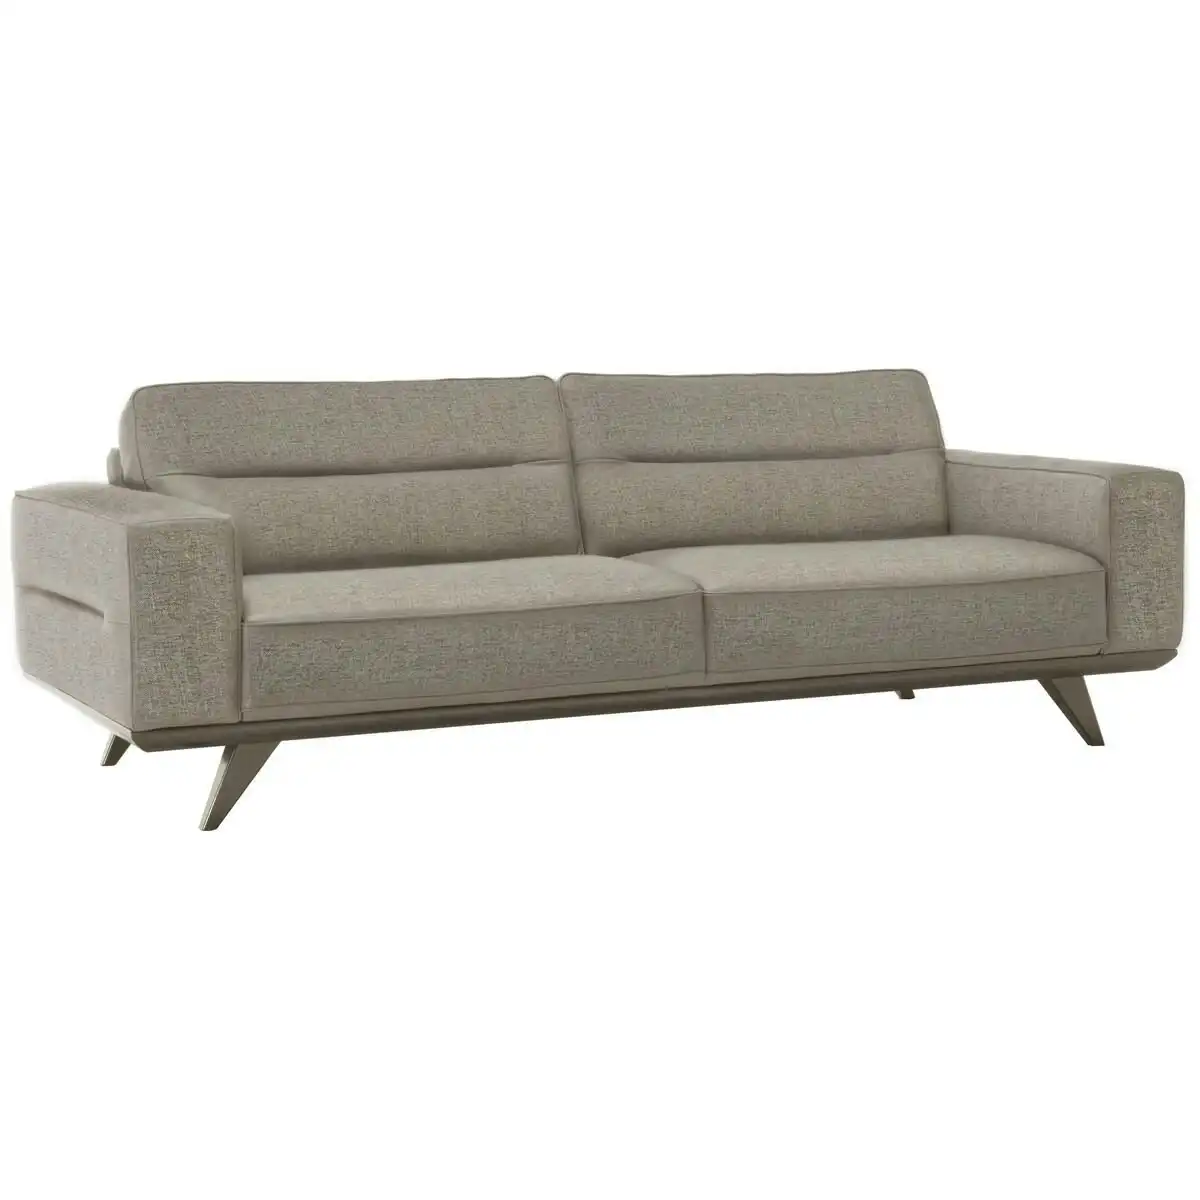 Natuzzi Editions Adrenalina Beige Fabric Sofa 3 Seater